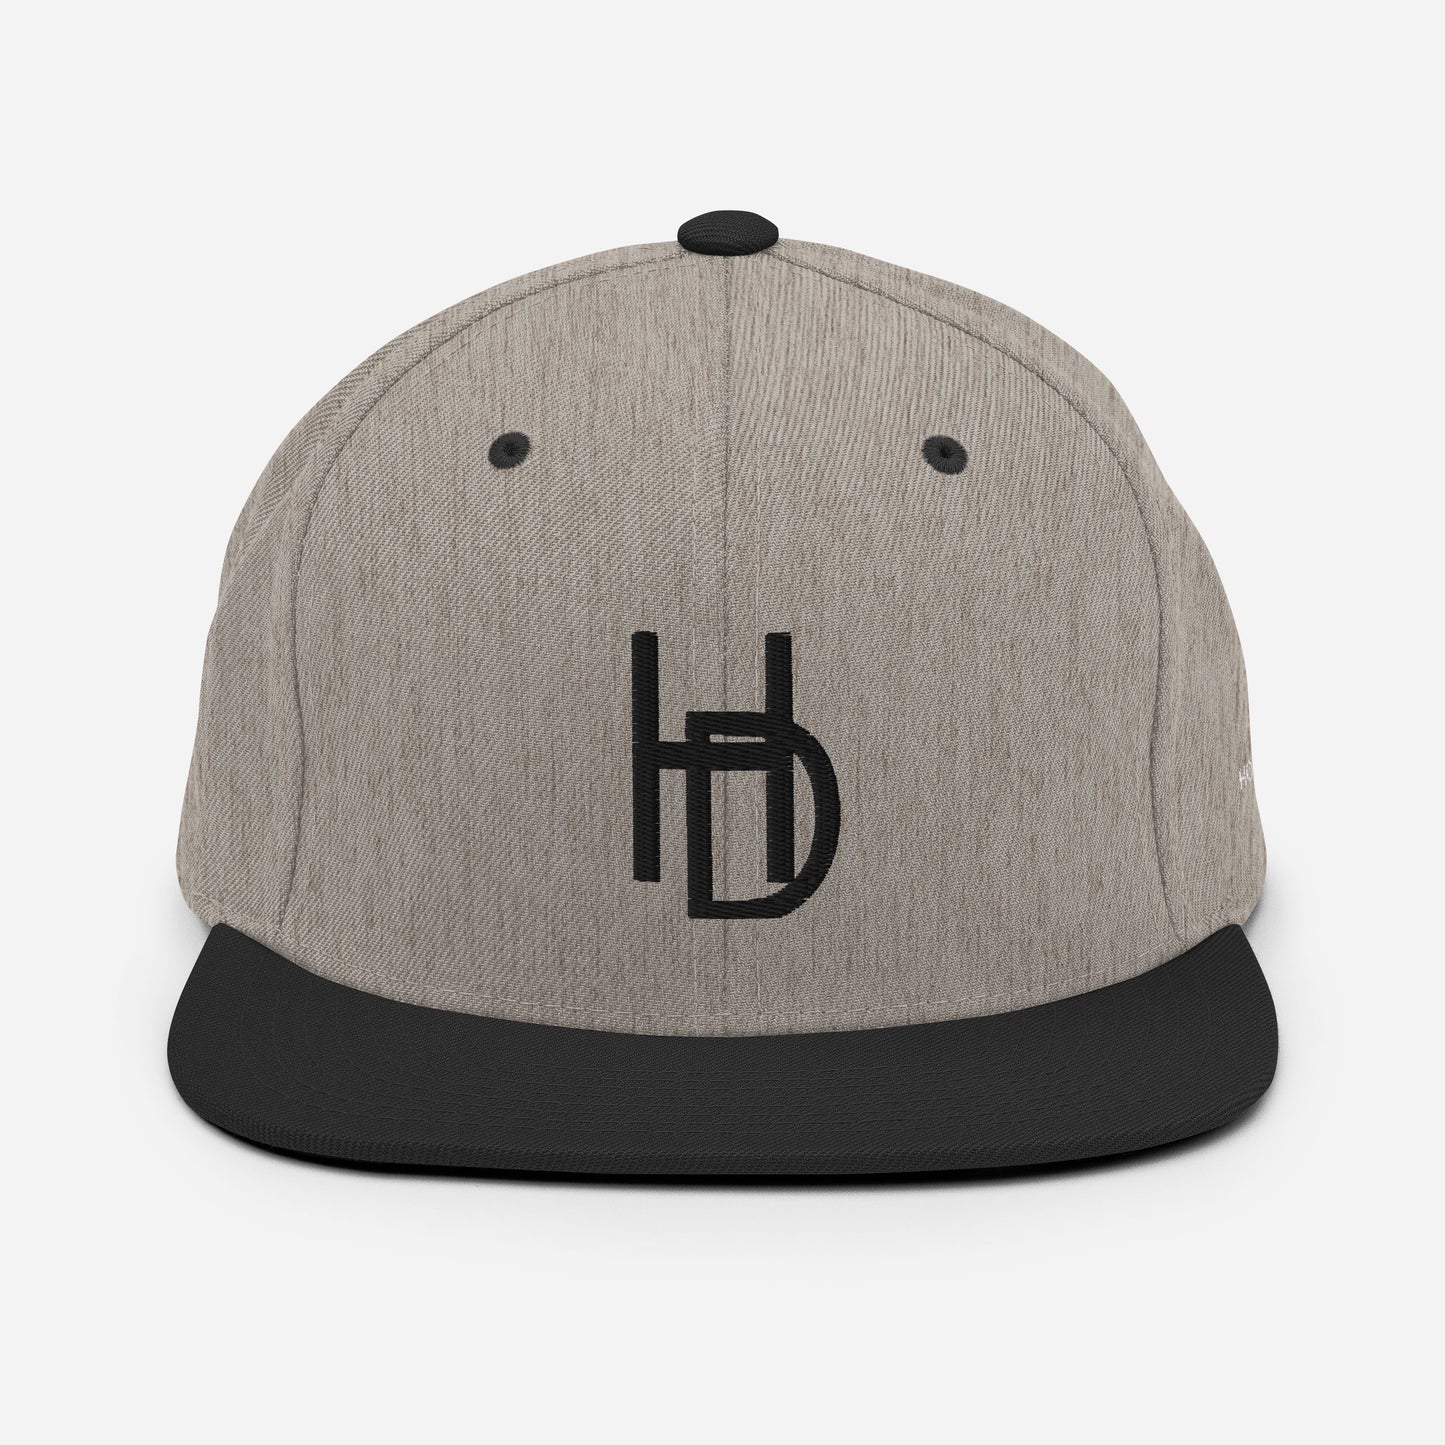 Hope Dealer Baller Status "Blackout" Snapback Hat